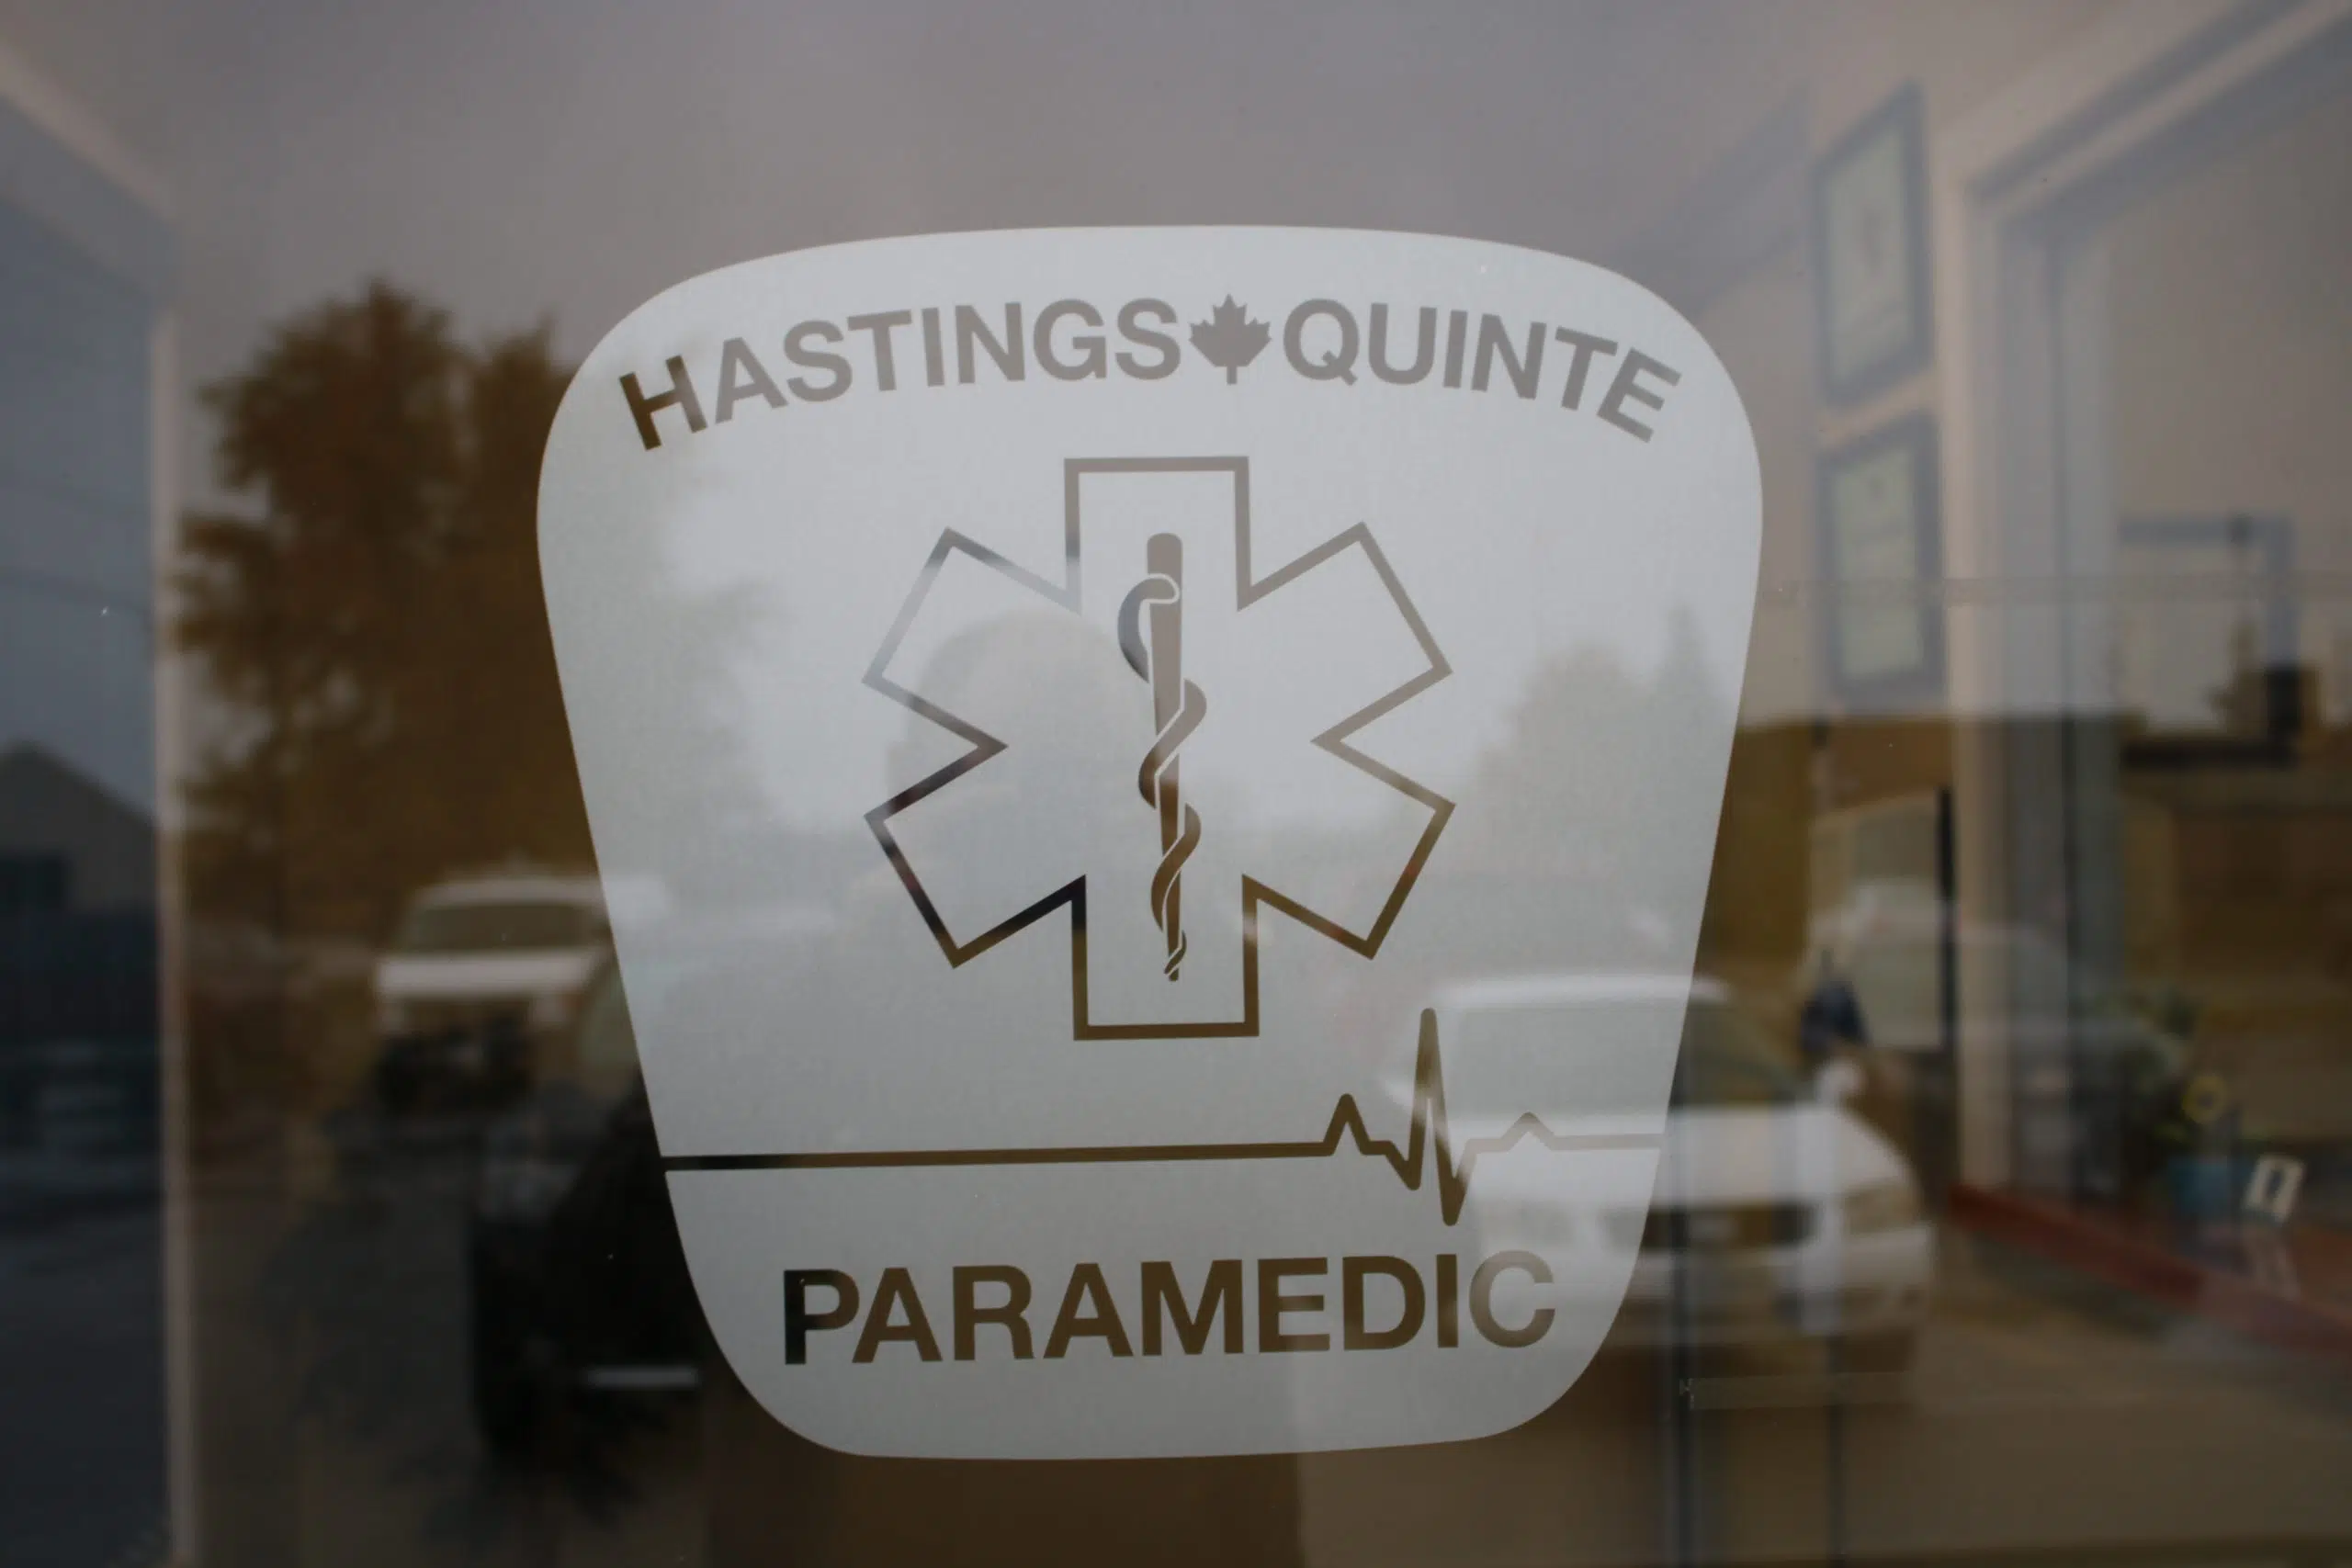 LOOK AHEAD:  Hasting Quinte EMS